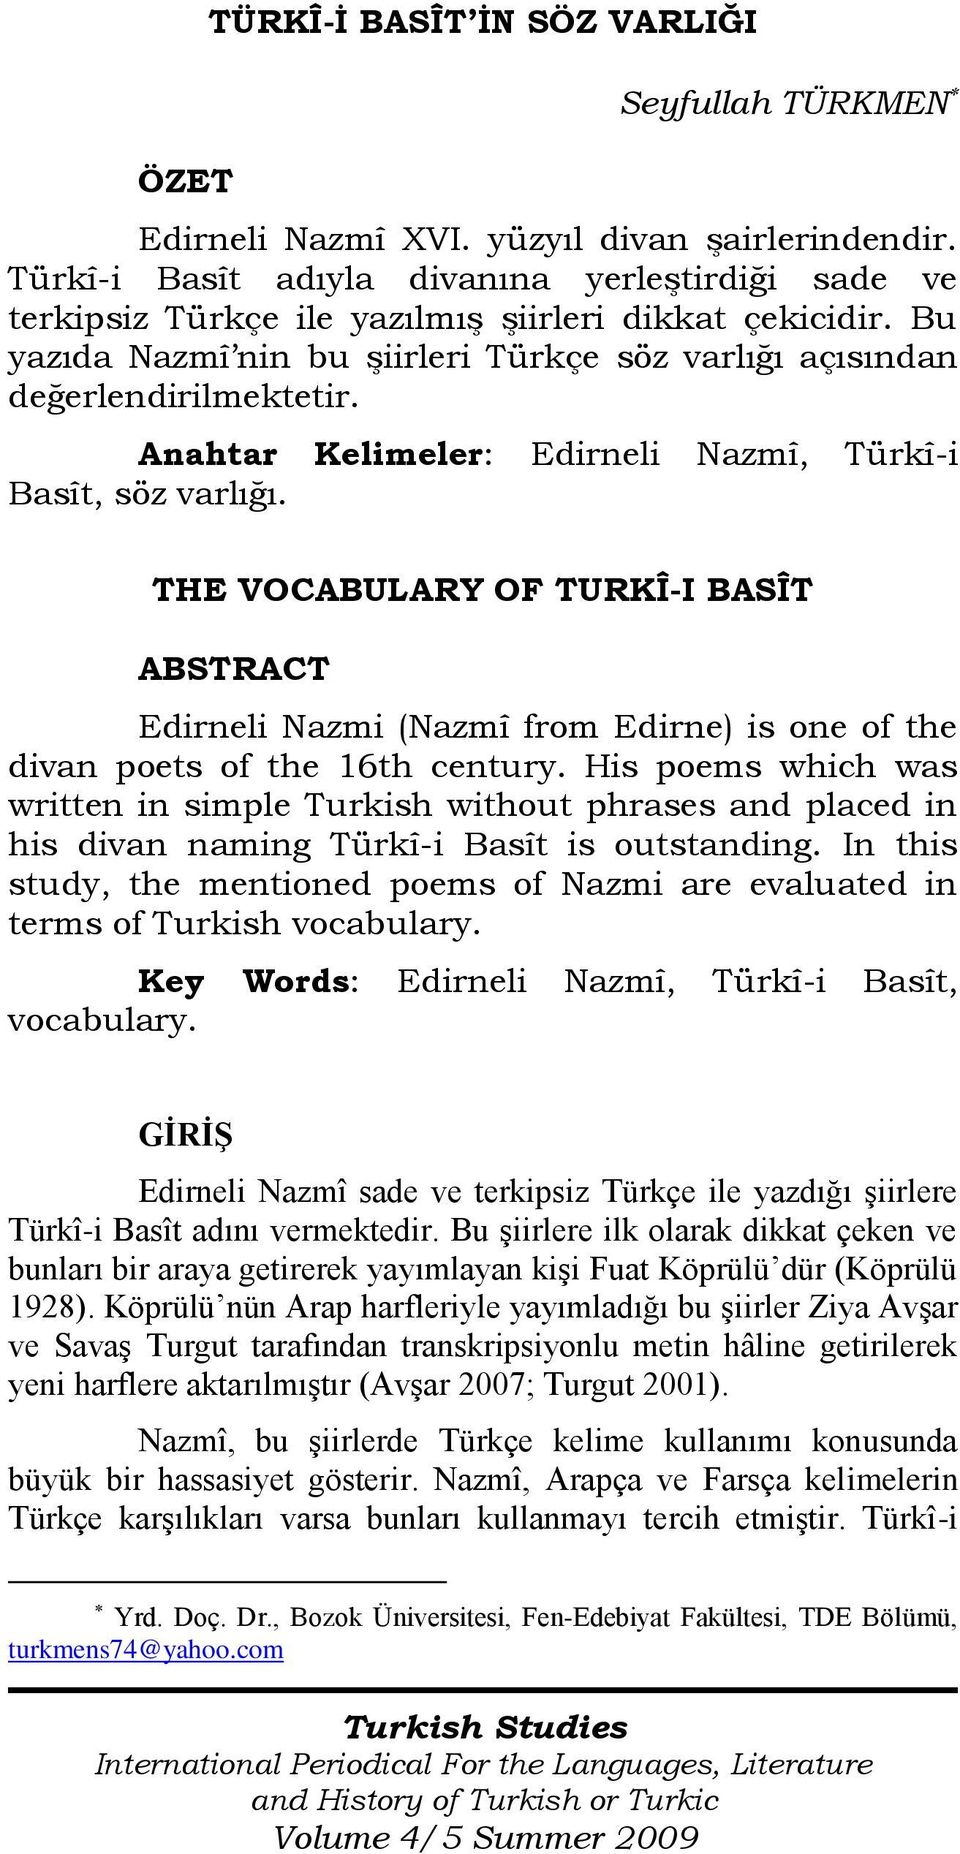 Anahtar Kelimeler: Edirneli Nazmî, Türkî-i Basît, söz varlığı. THE VOCABULARY OF TURKÎ-I BASÎT ABSTRACT Edirneli Nazmi (Nazmî from Edirne) is one of the divan poets of the 16th century.